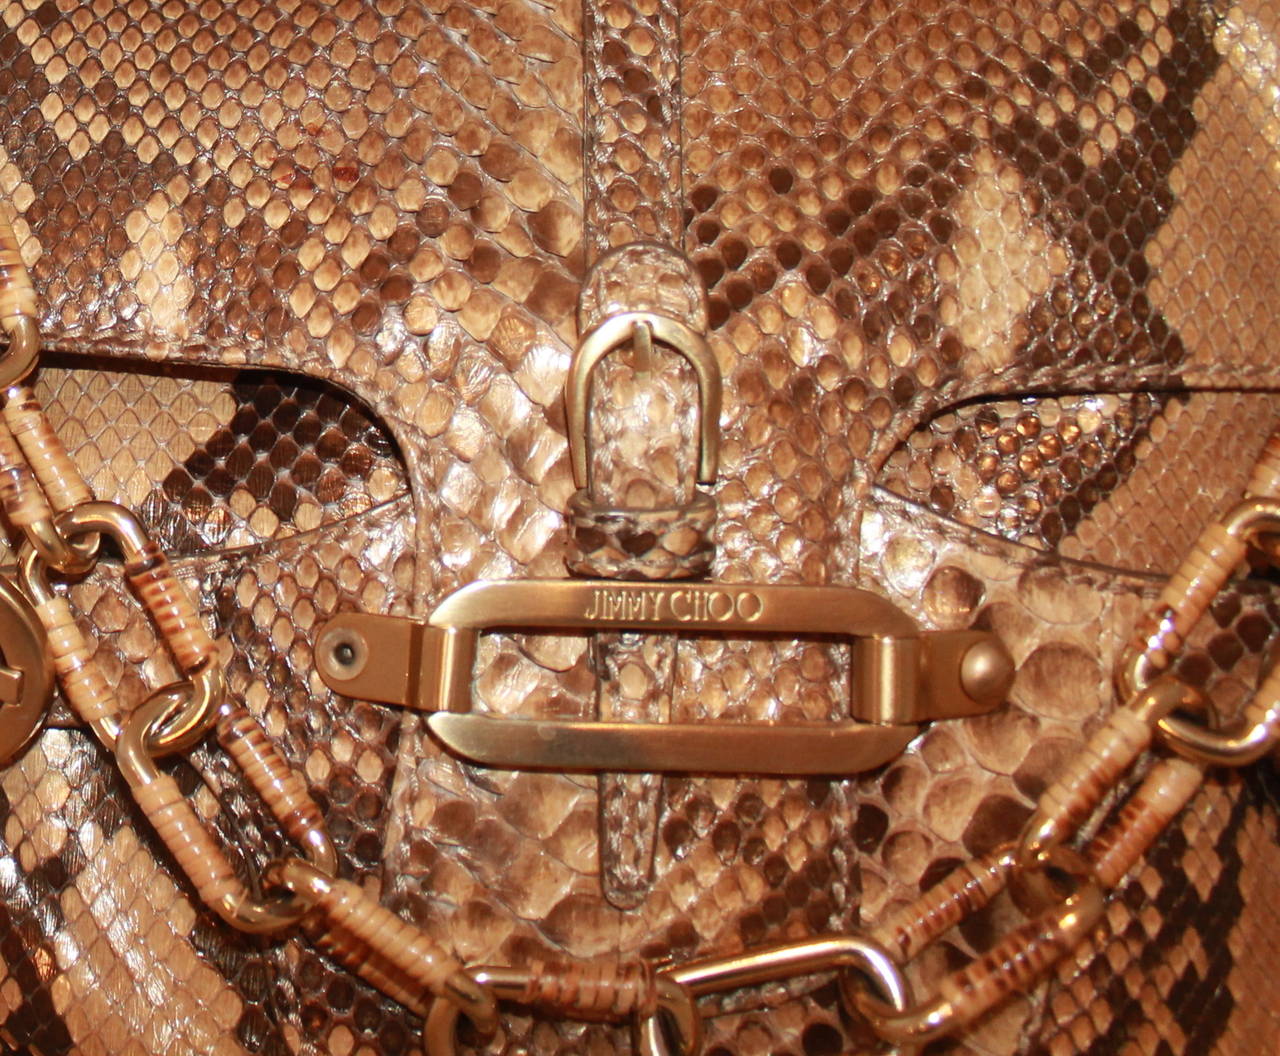 Jimmy Choo Earth Tone Metallic Python Shoulder Handbag. This handbag is in excellent condition.

Measurements:
Length- 9.5